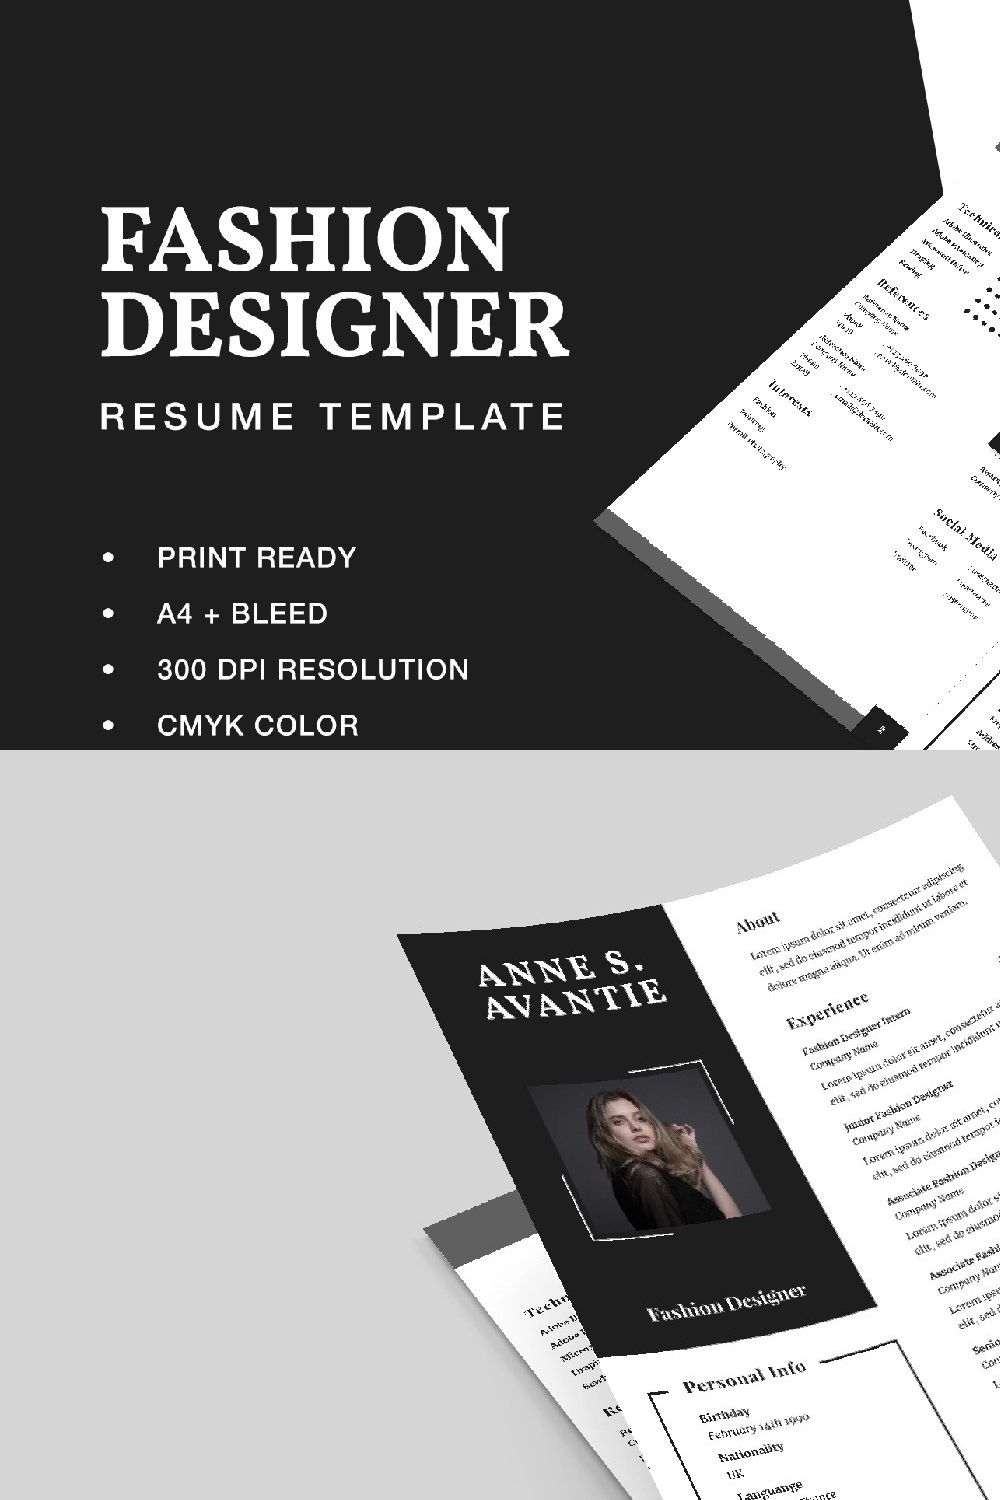 Fashion Designer Resume CV Template pinterest preview image.